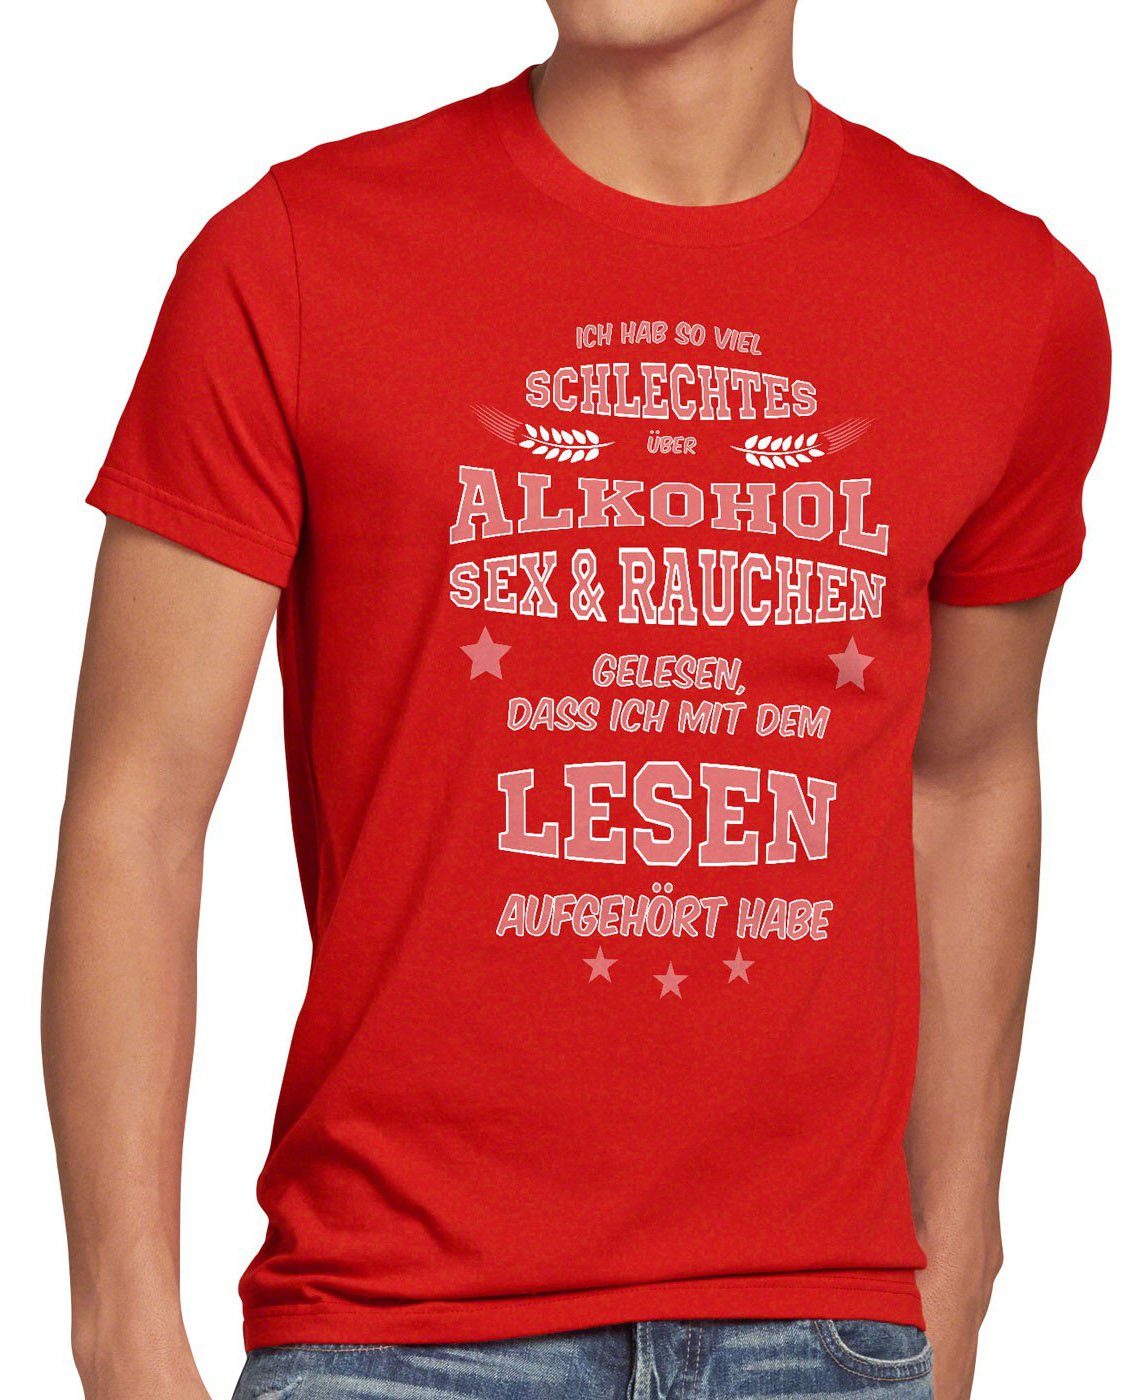 schlechtes Print-Shirt Alkohol Fun T-Shirt style3 Rauchen Sex Funshirt rot Viel Spruch gelesen Herren